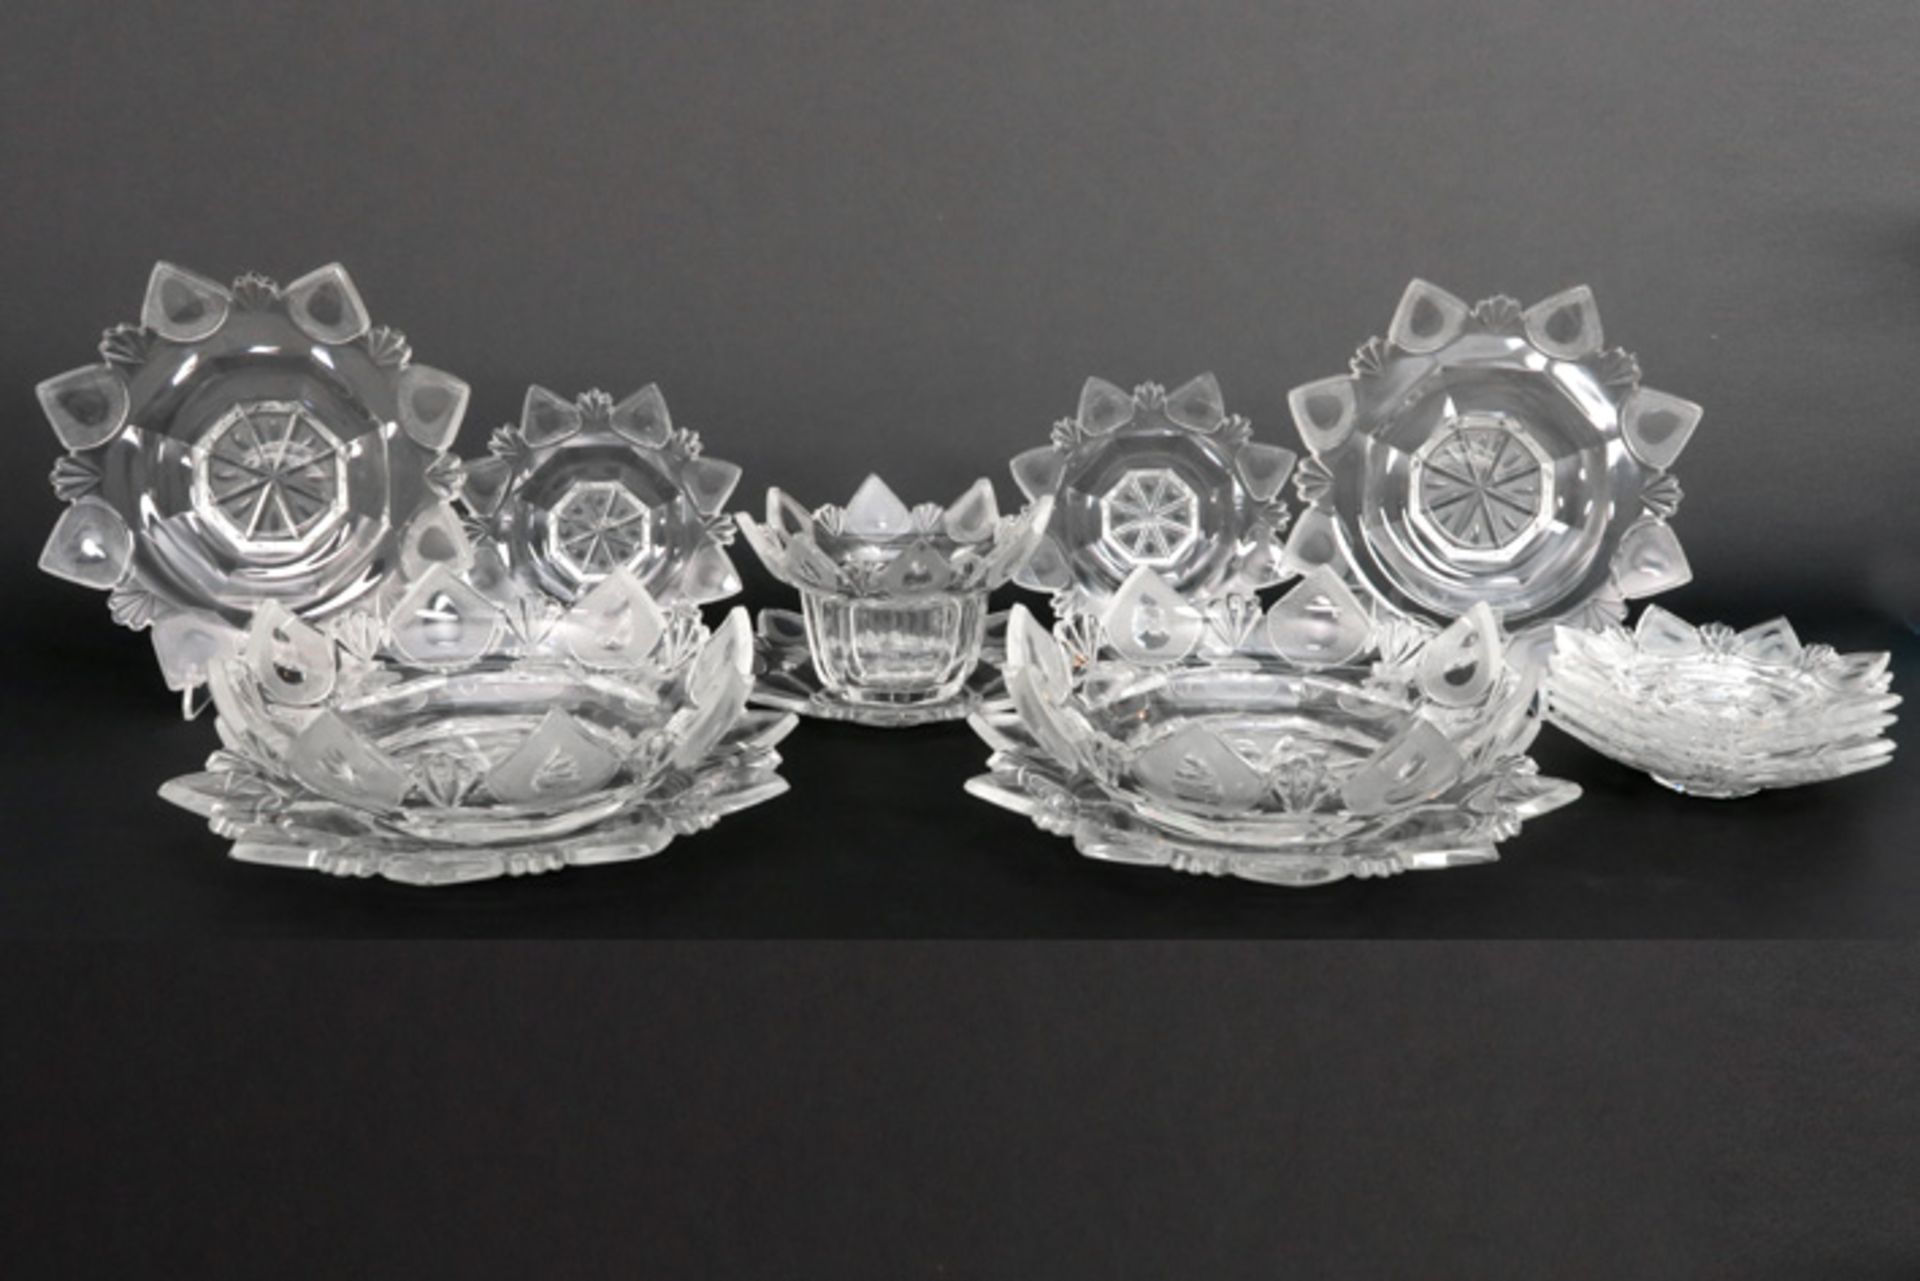 19th Cent. 14pc set of crystal plates and bowls || Negentiende eeuwse veertiendelige set in geslepen